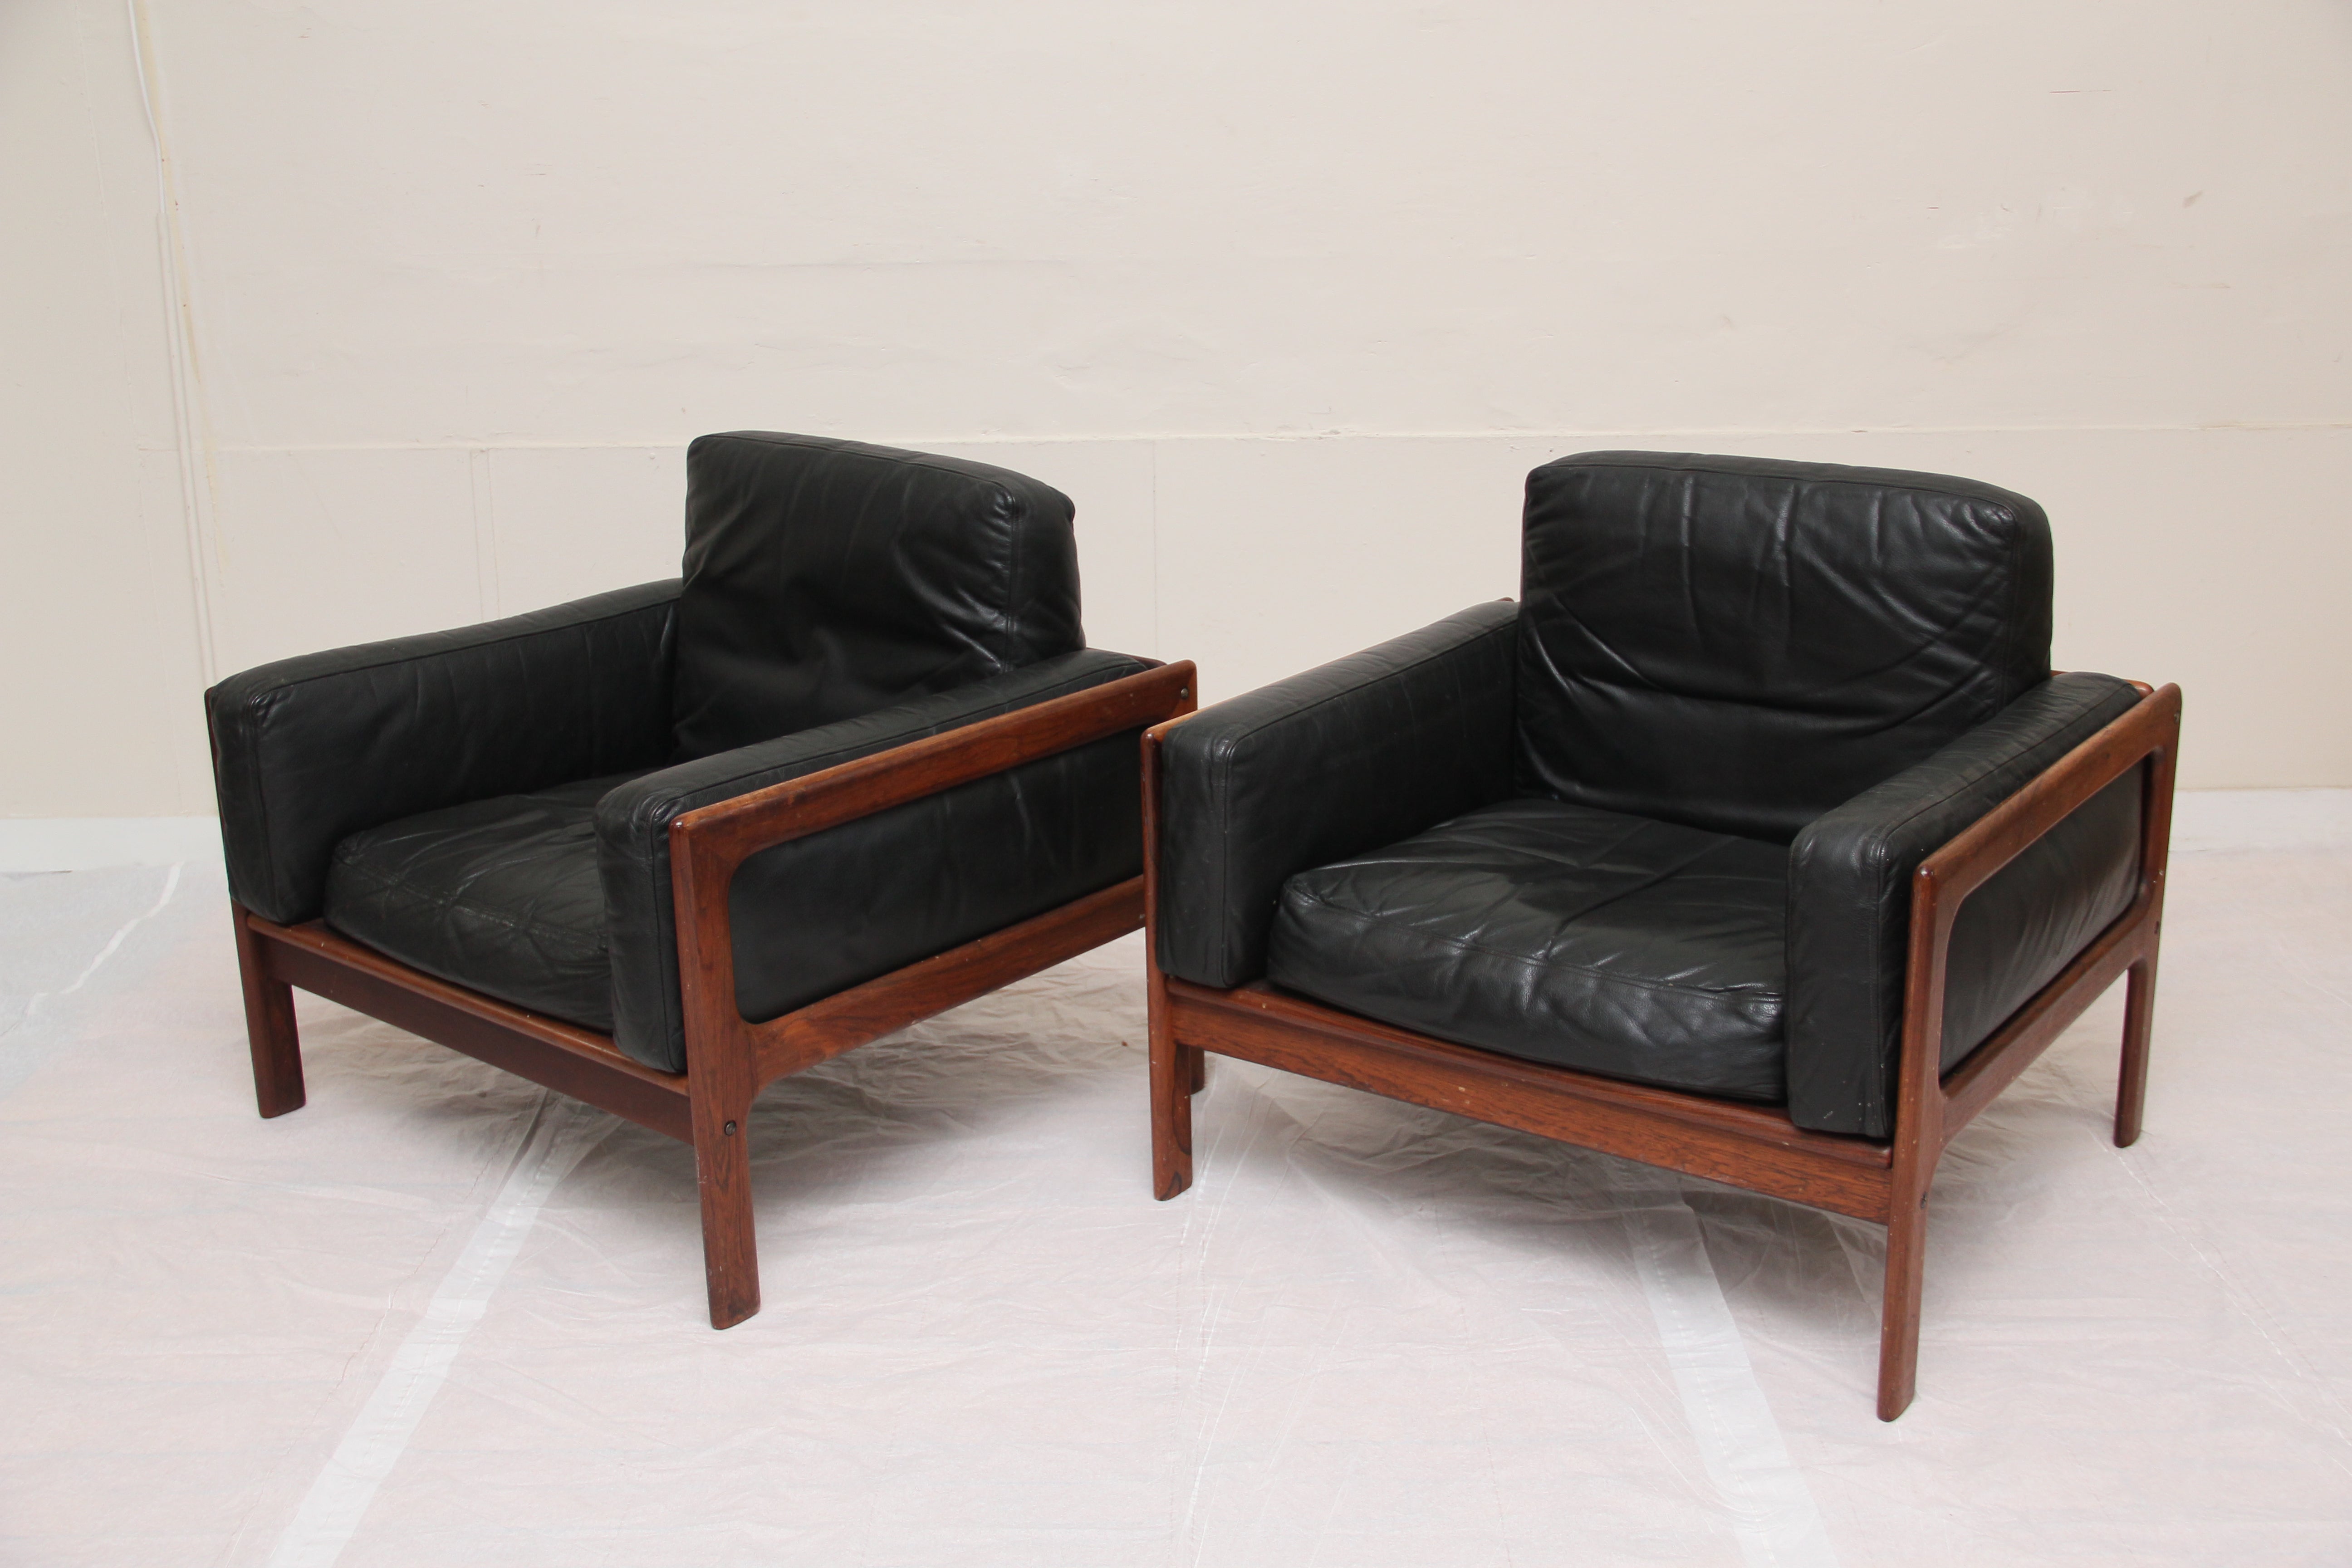 Komfort Mobler Chairs